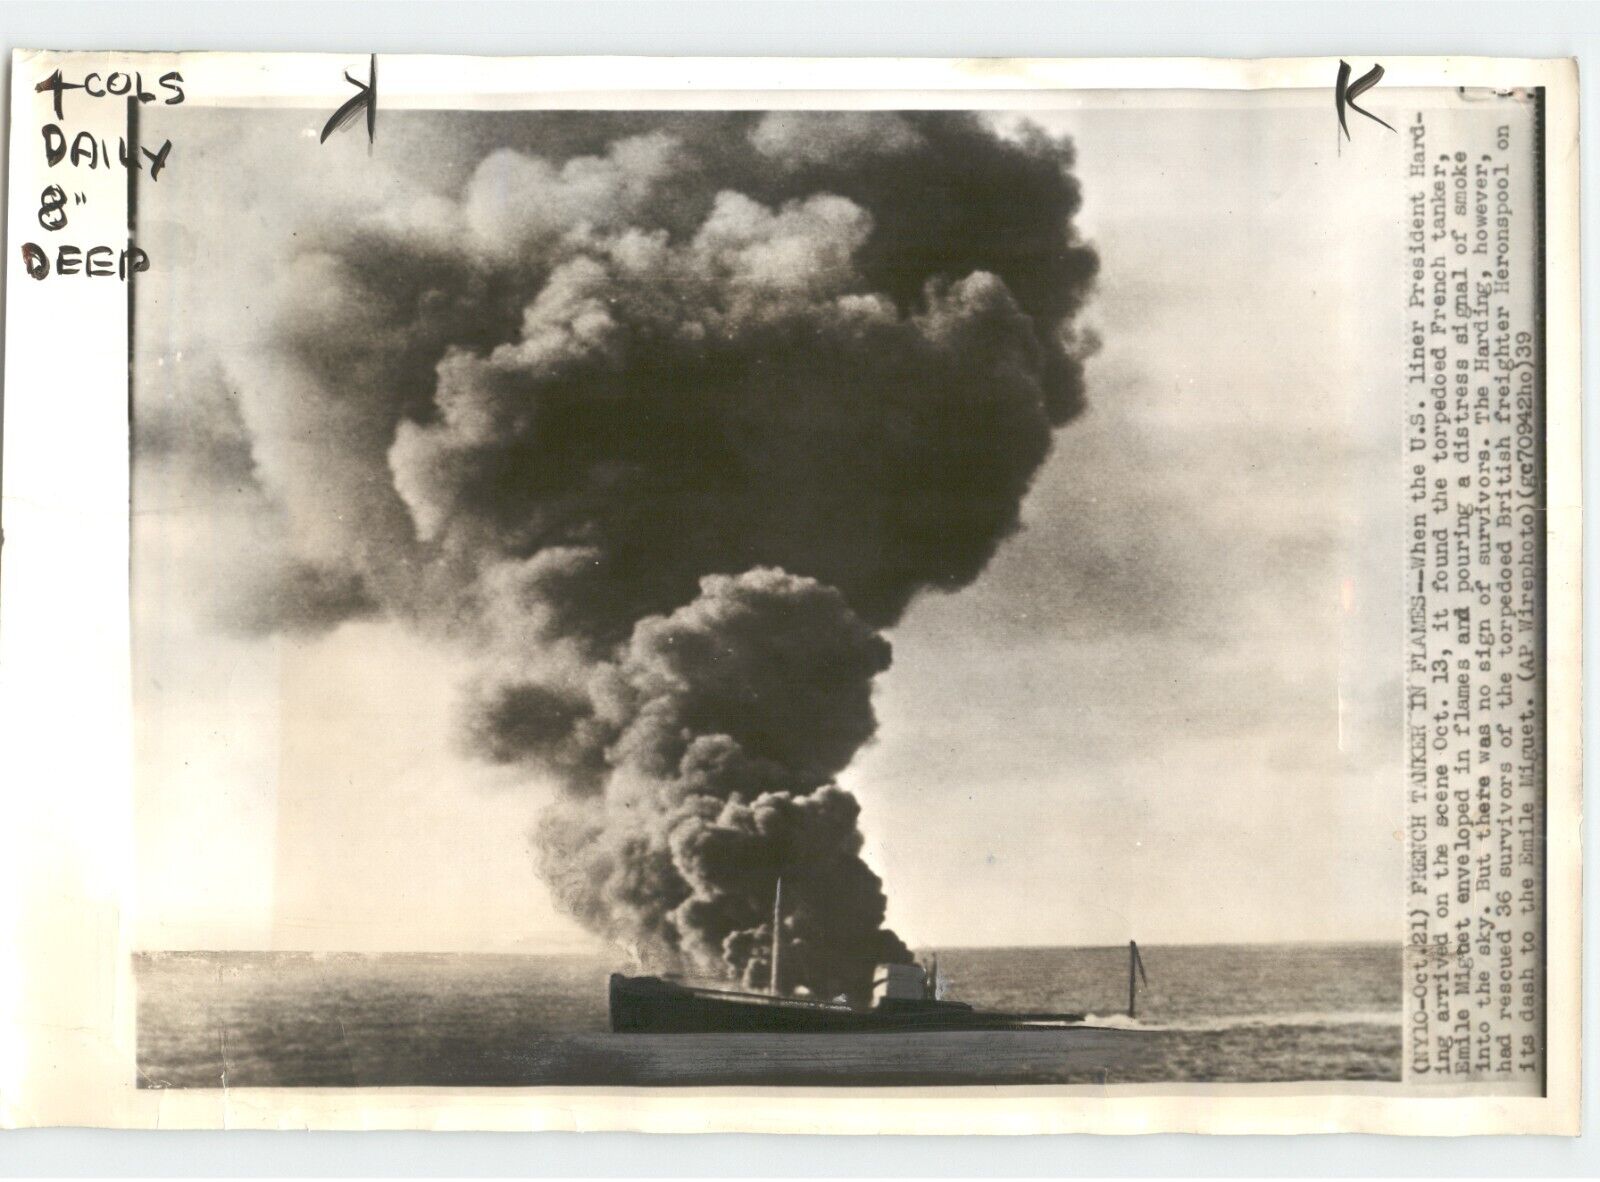 FRENCH OIL TANKER Emilie Miguet Torpedoed & Ablaze VINTAGE 1939 Press Photo